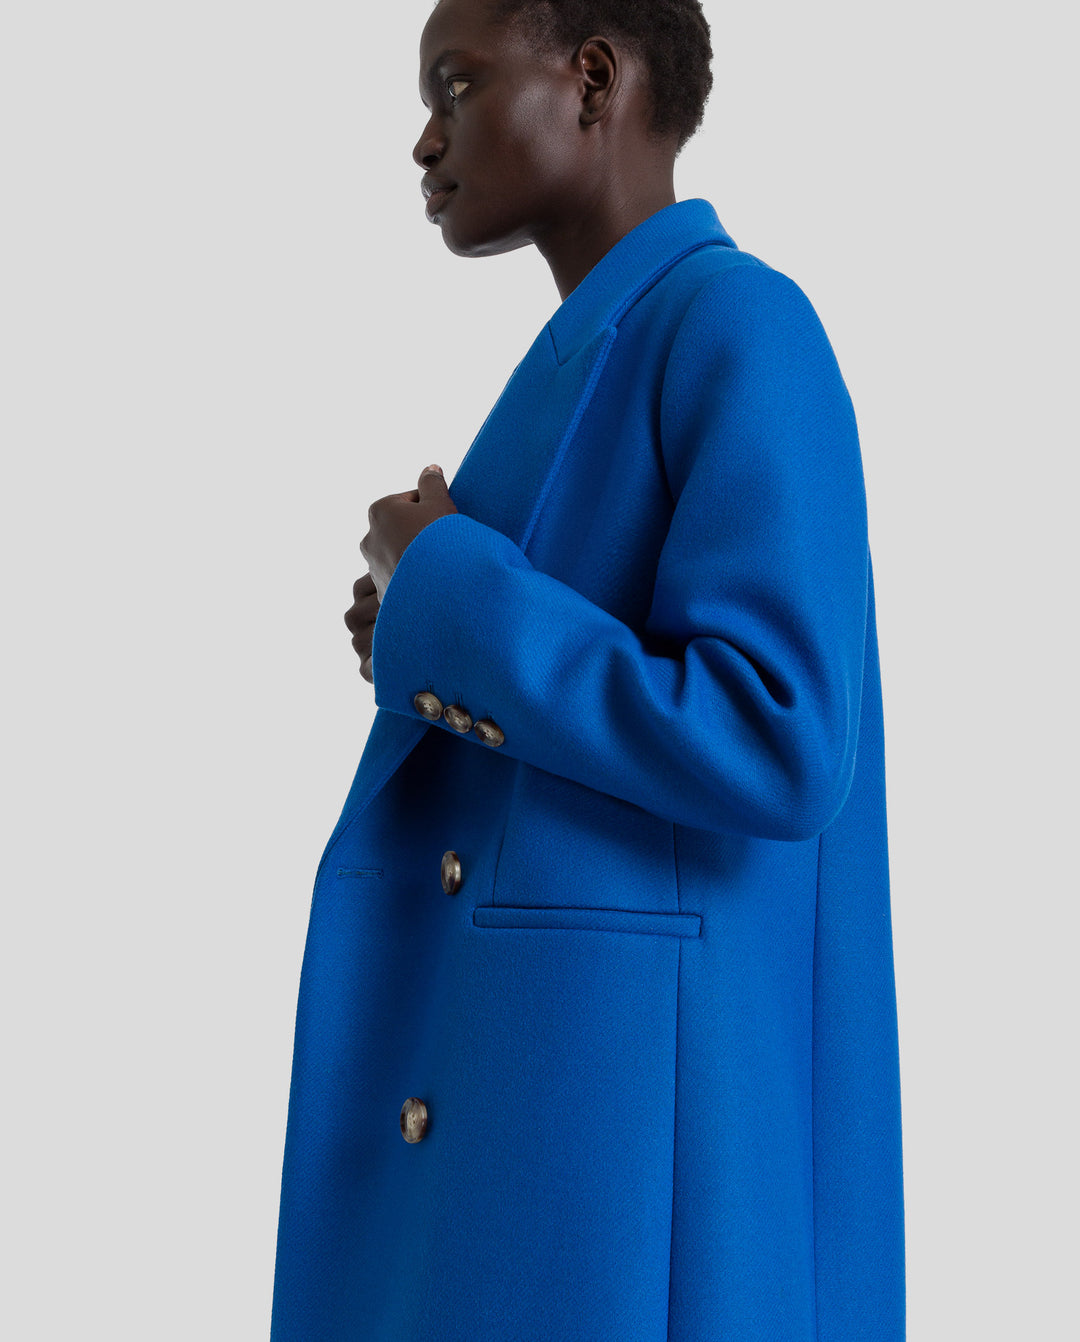 Cindy boxy coat in cobalt blue